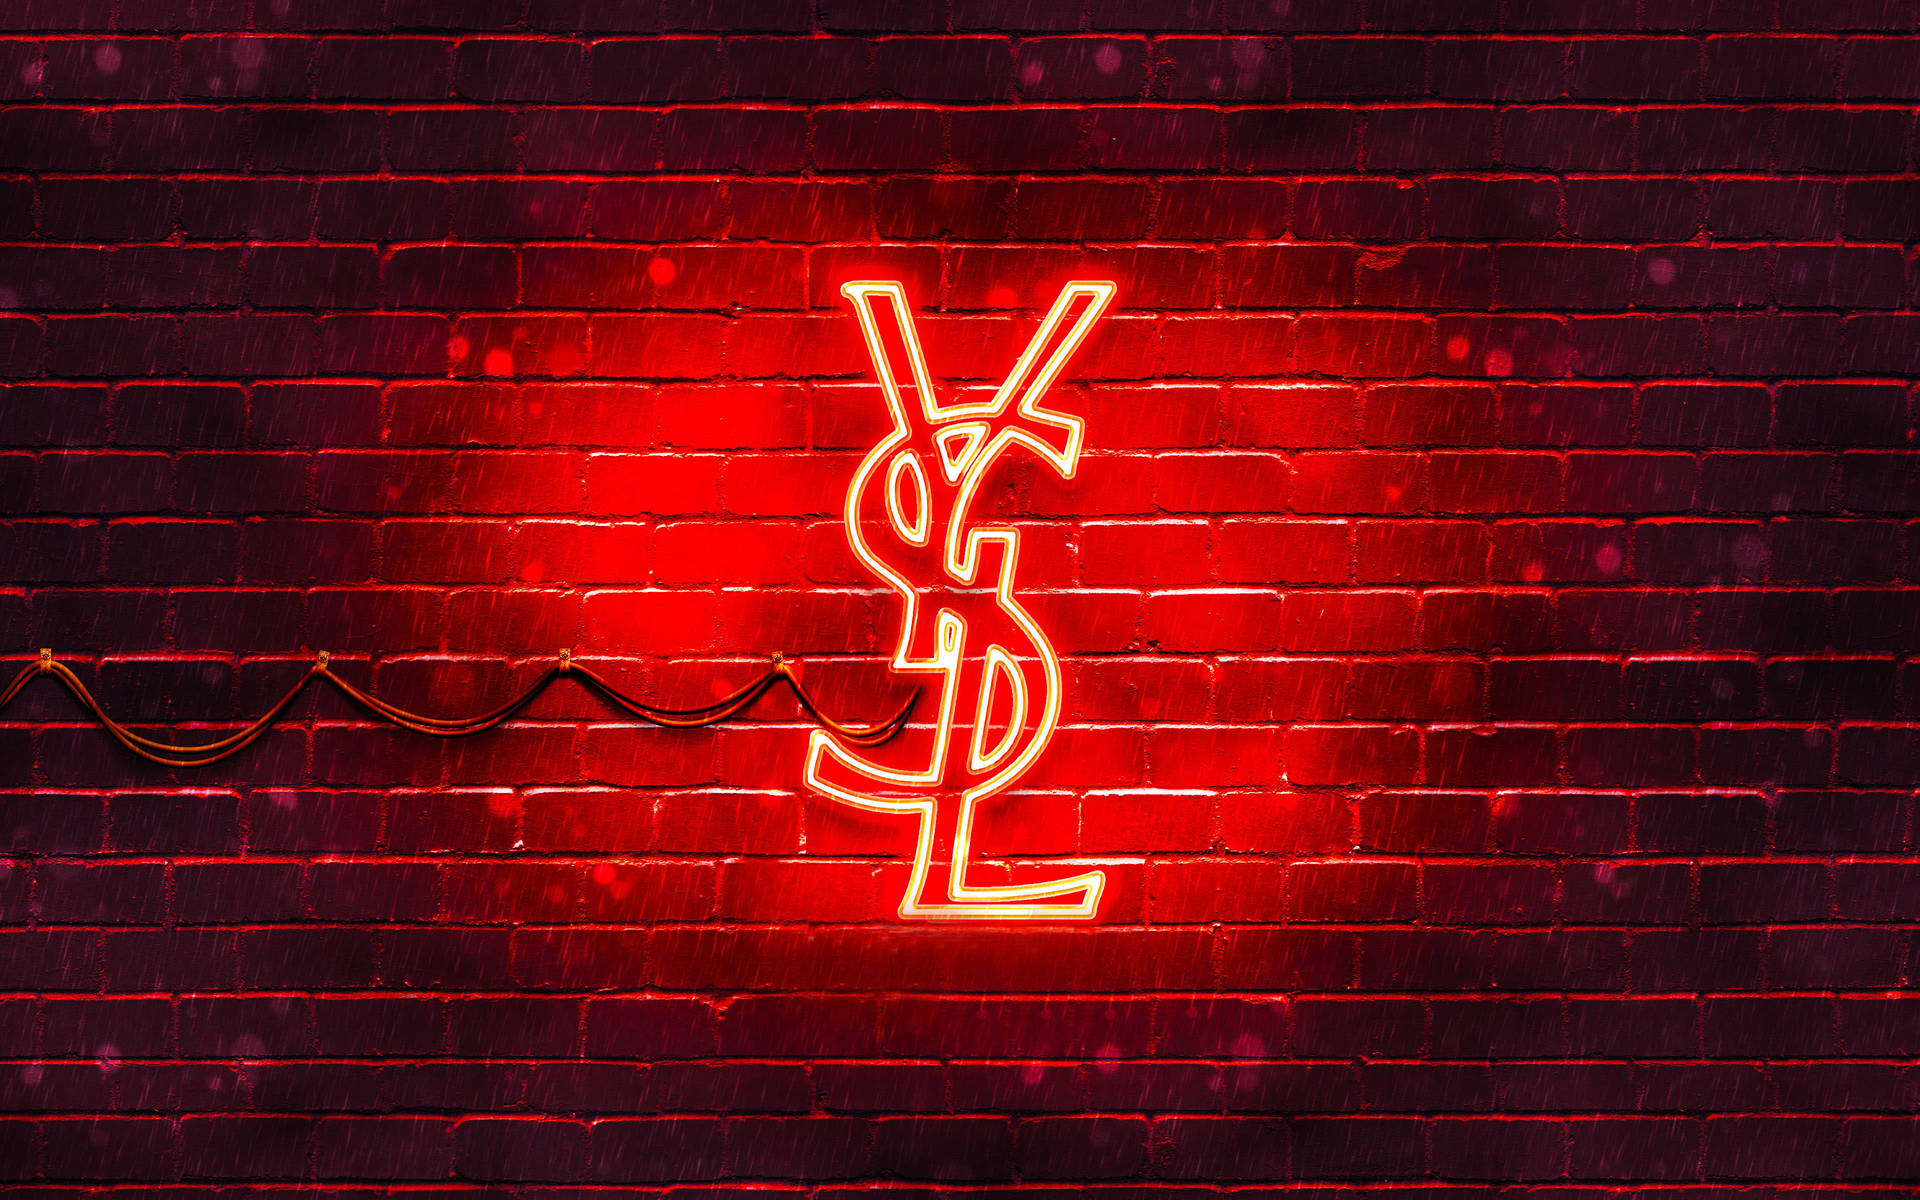 Red YSL Neon Lighting Wallpaper